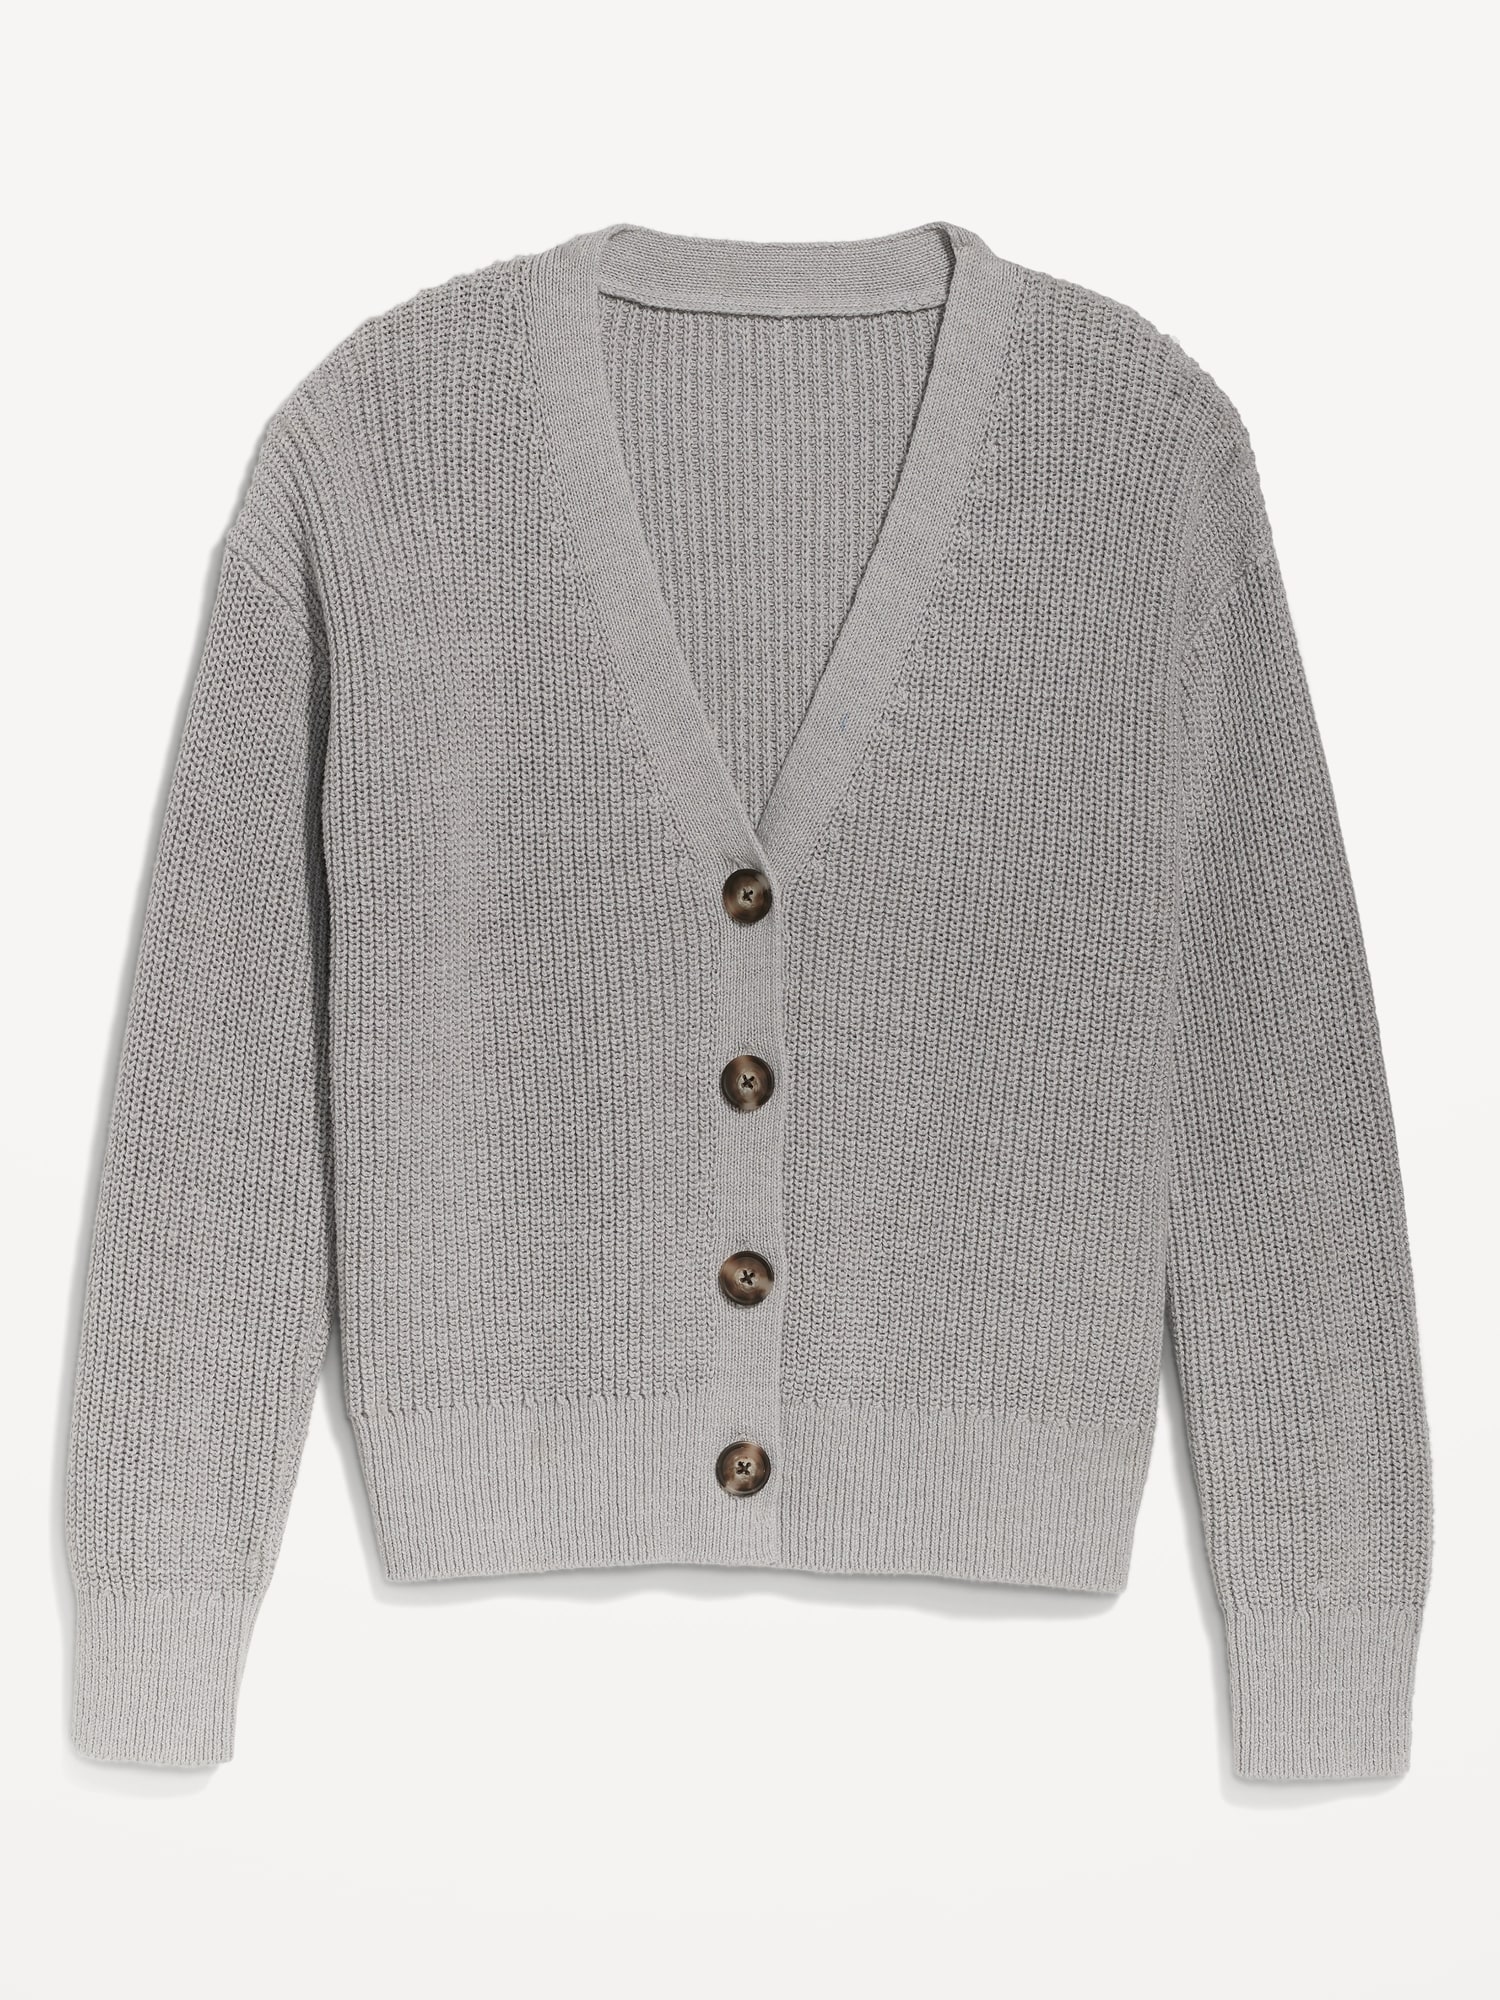 Lightweight Shaker-Stitch Cardigan Sweater for Women | Old Navy